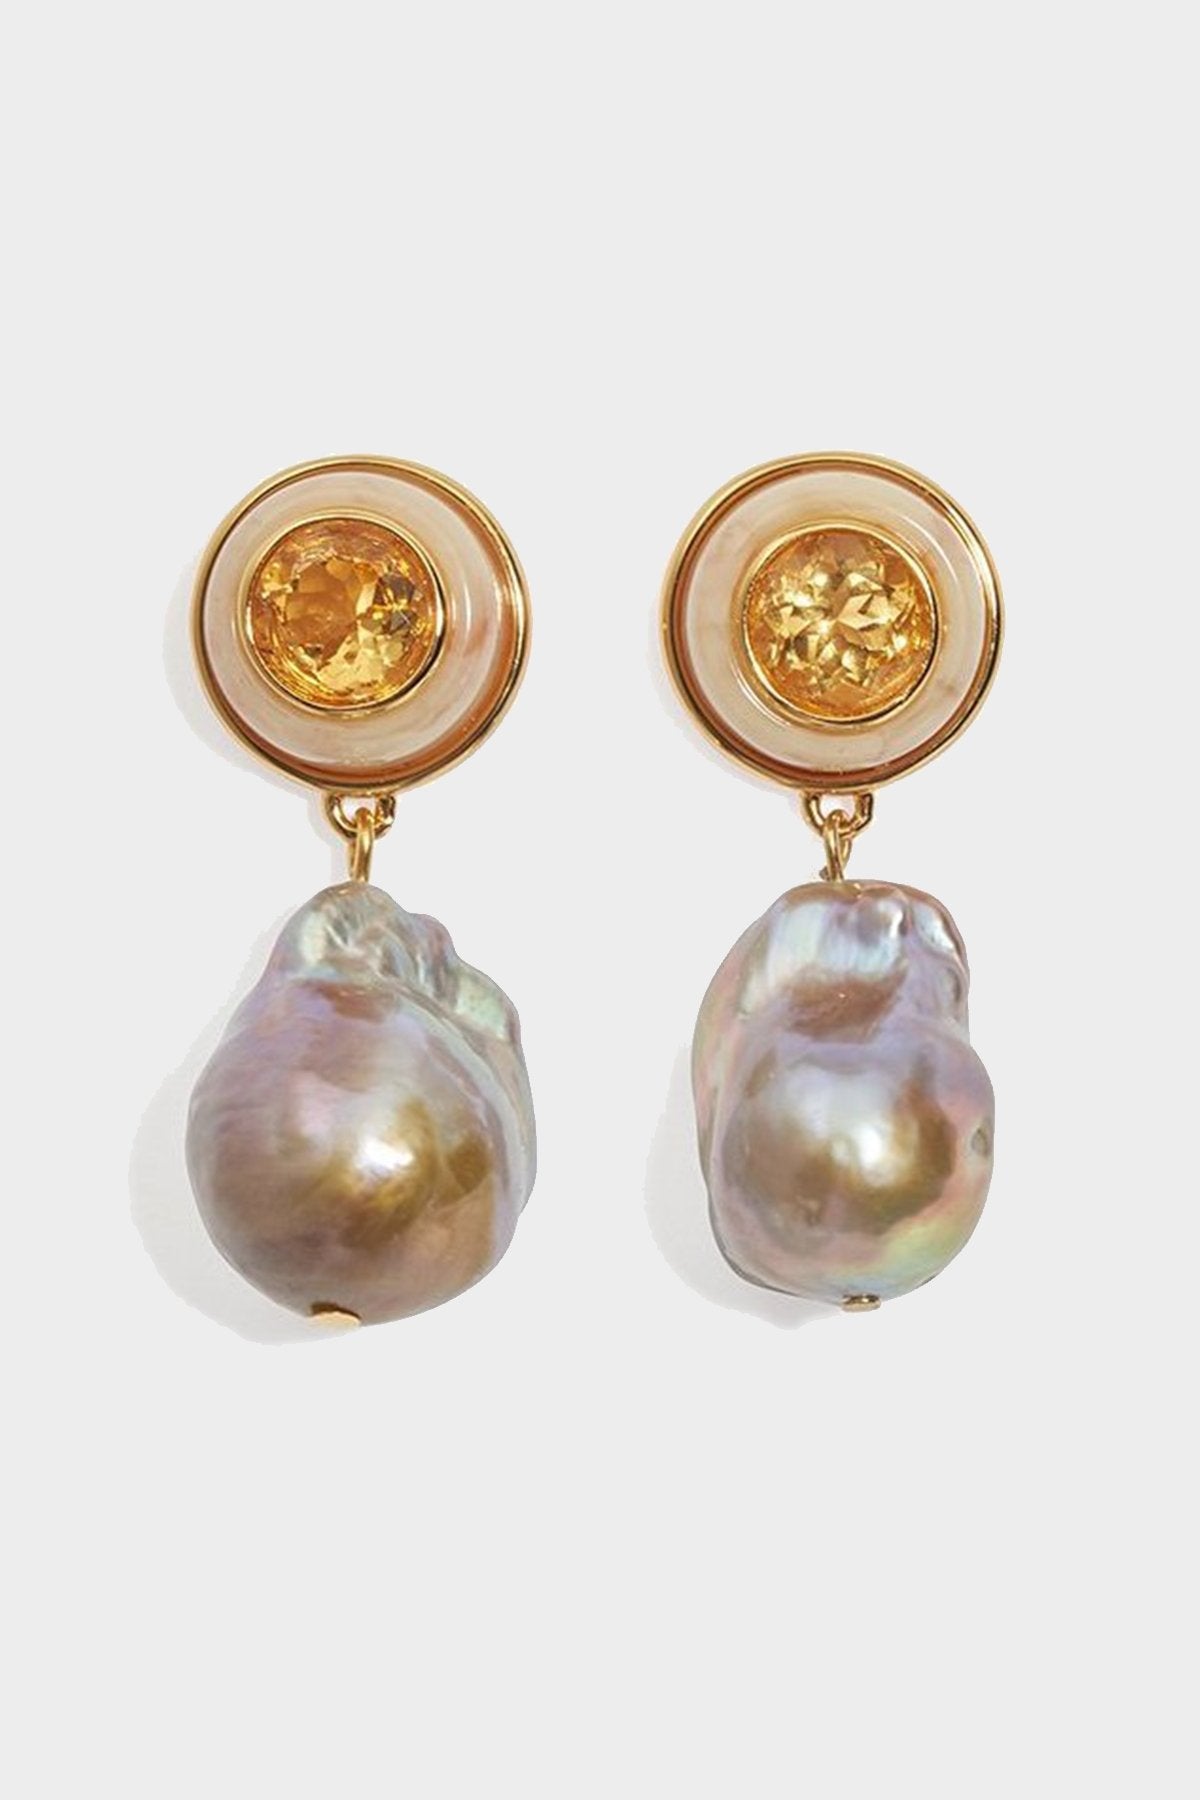 Candy Drop Earrings in Bronze Gray - shop-olivia.com